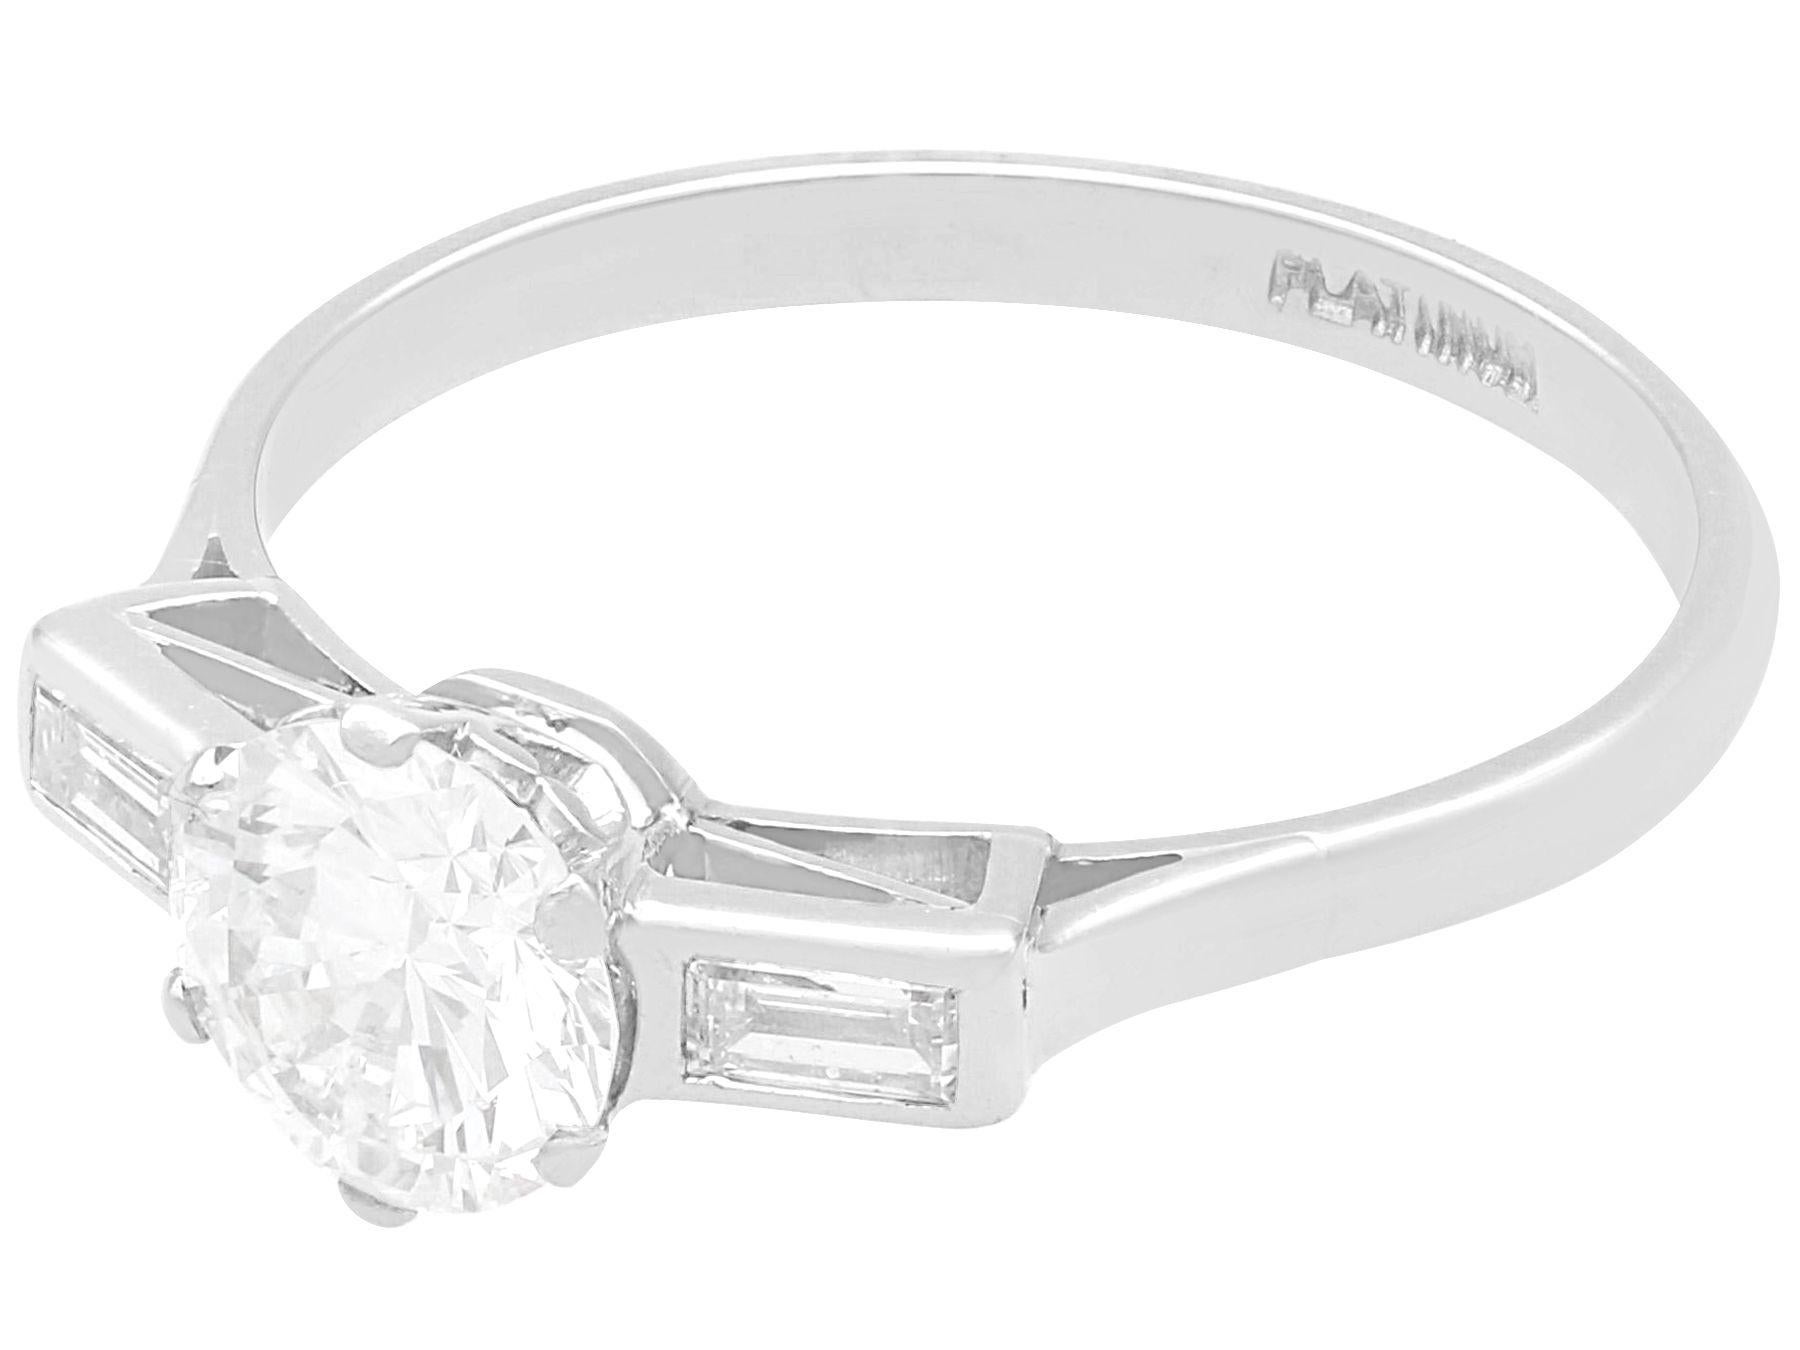 1.28 carat diamond ring